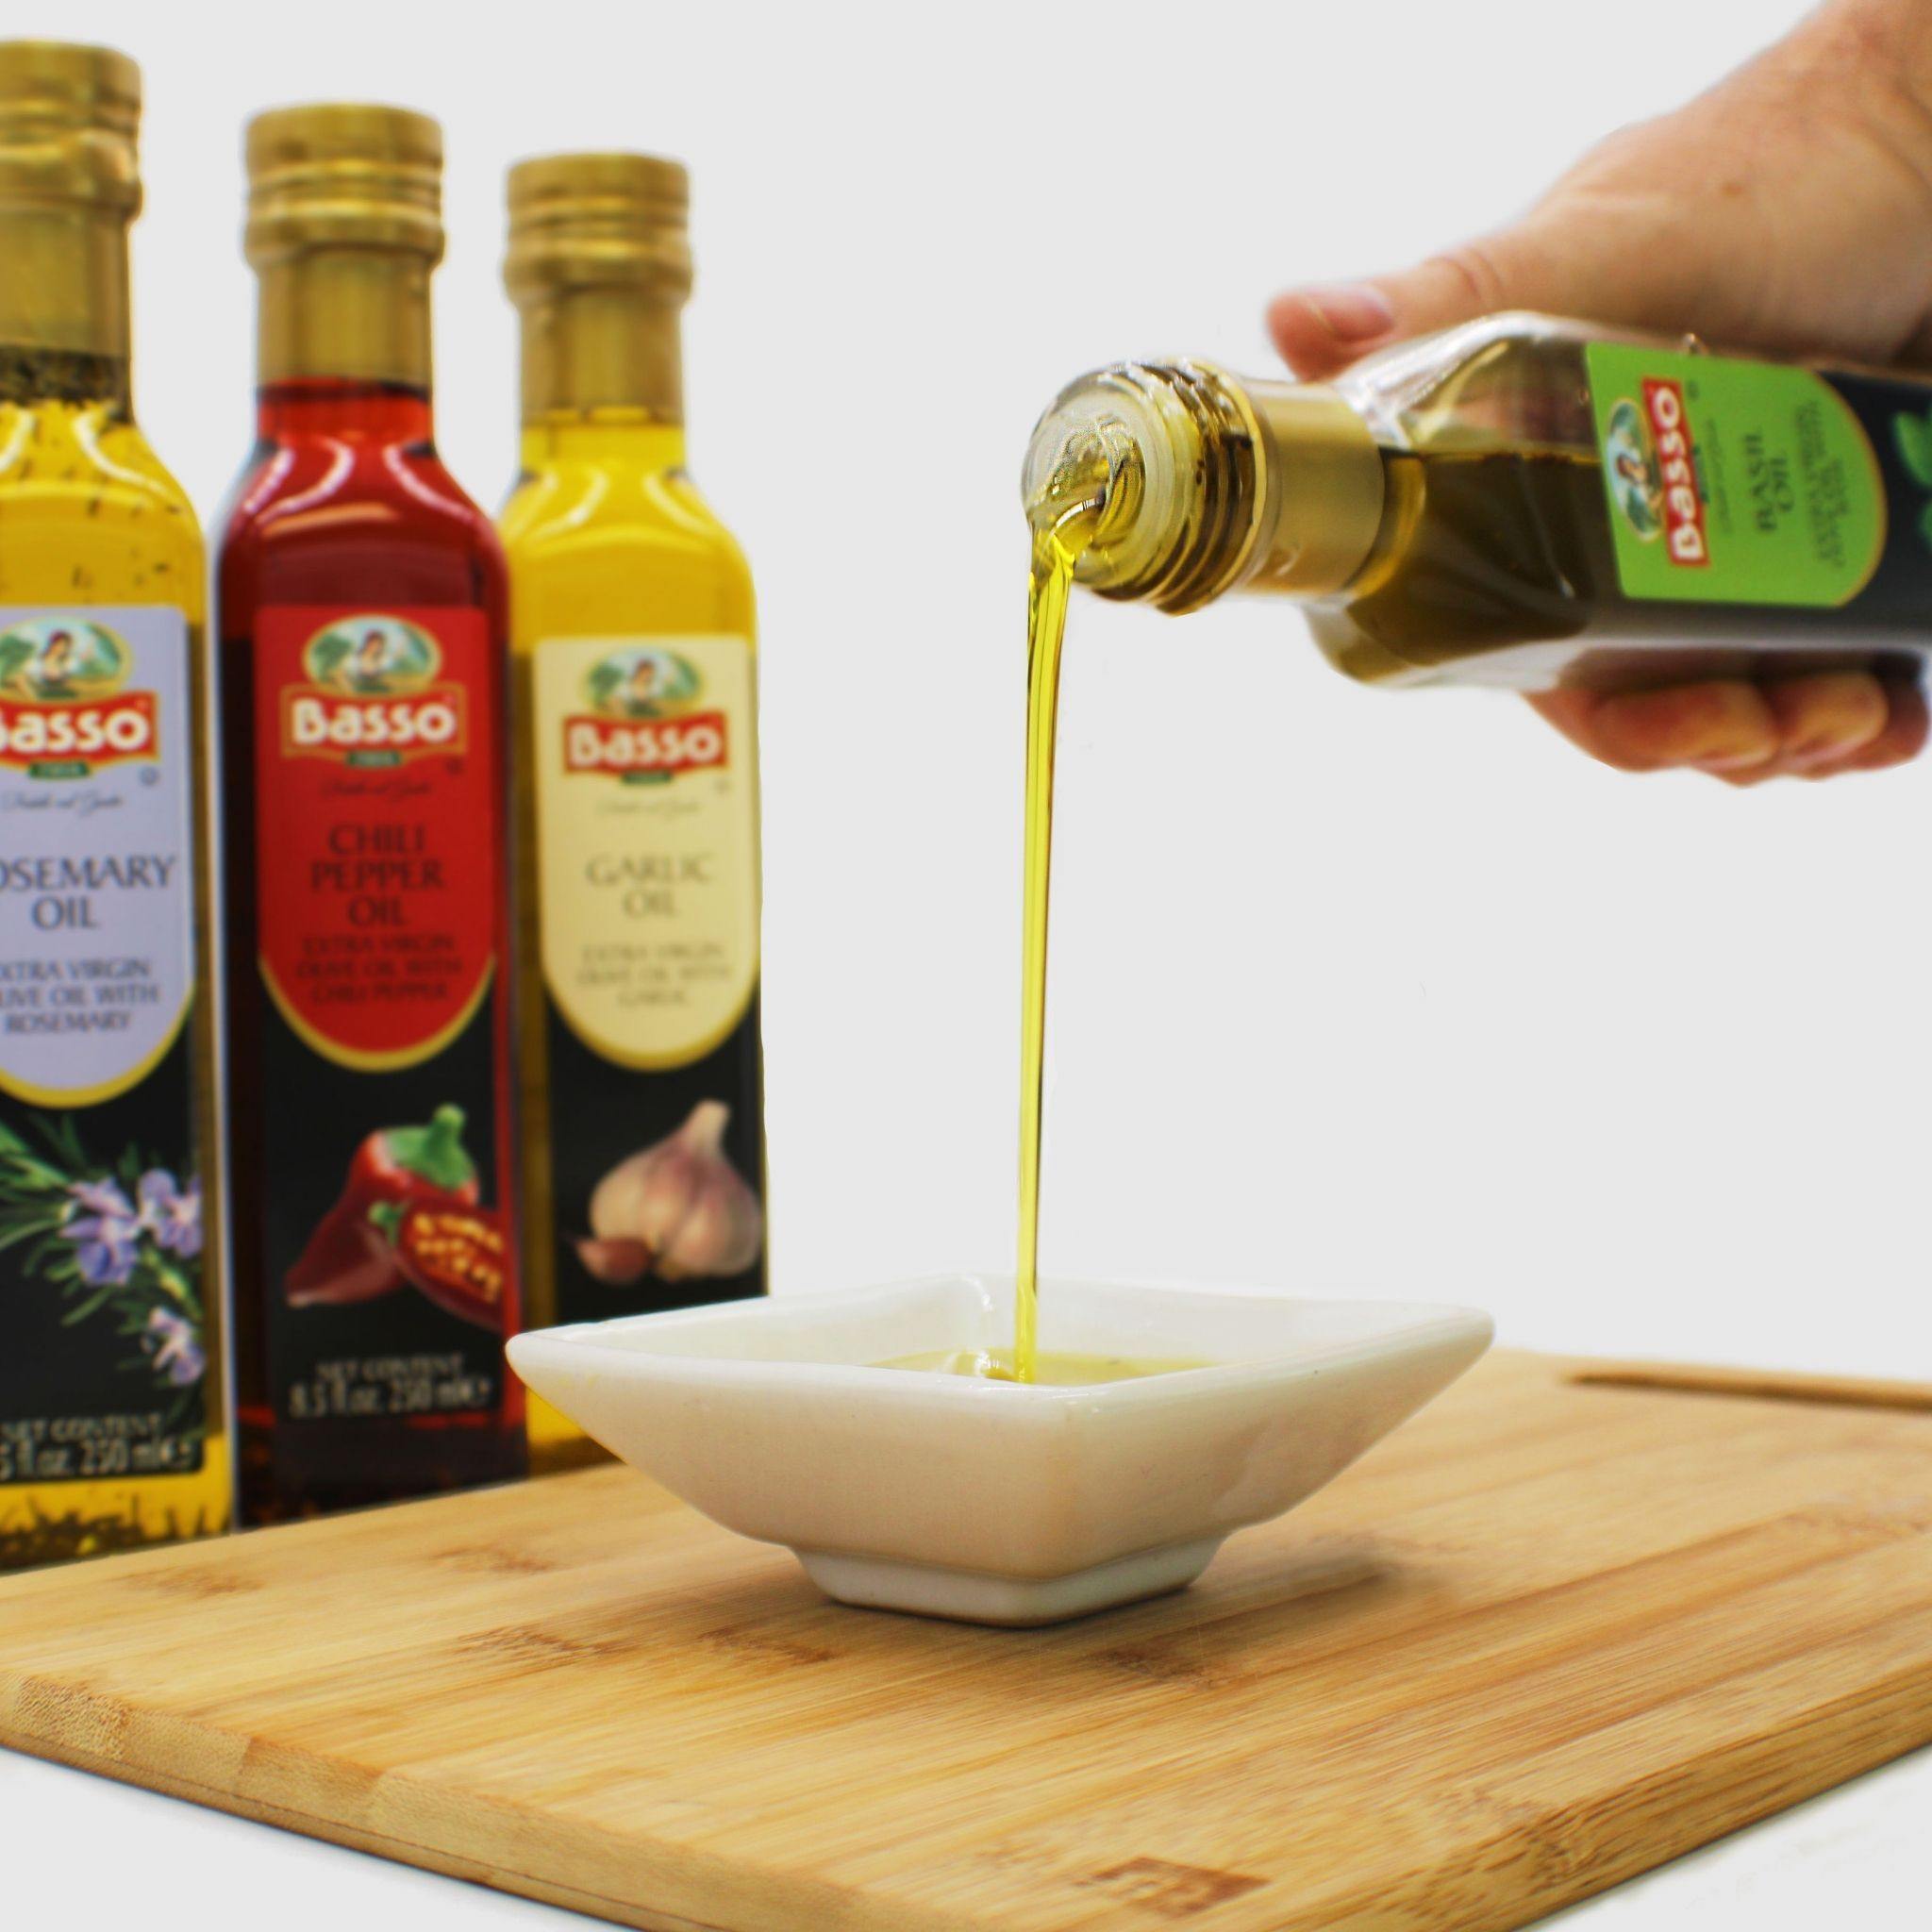 Basso Infused Extra Virgin Olive Oil Gift Set: Garlic | Chili Pepper | Rosemary | Basil | 4 bottles x 8.5 fl.oz (250ml) - Wholesale Italian Food